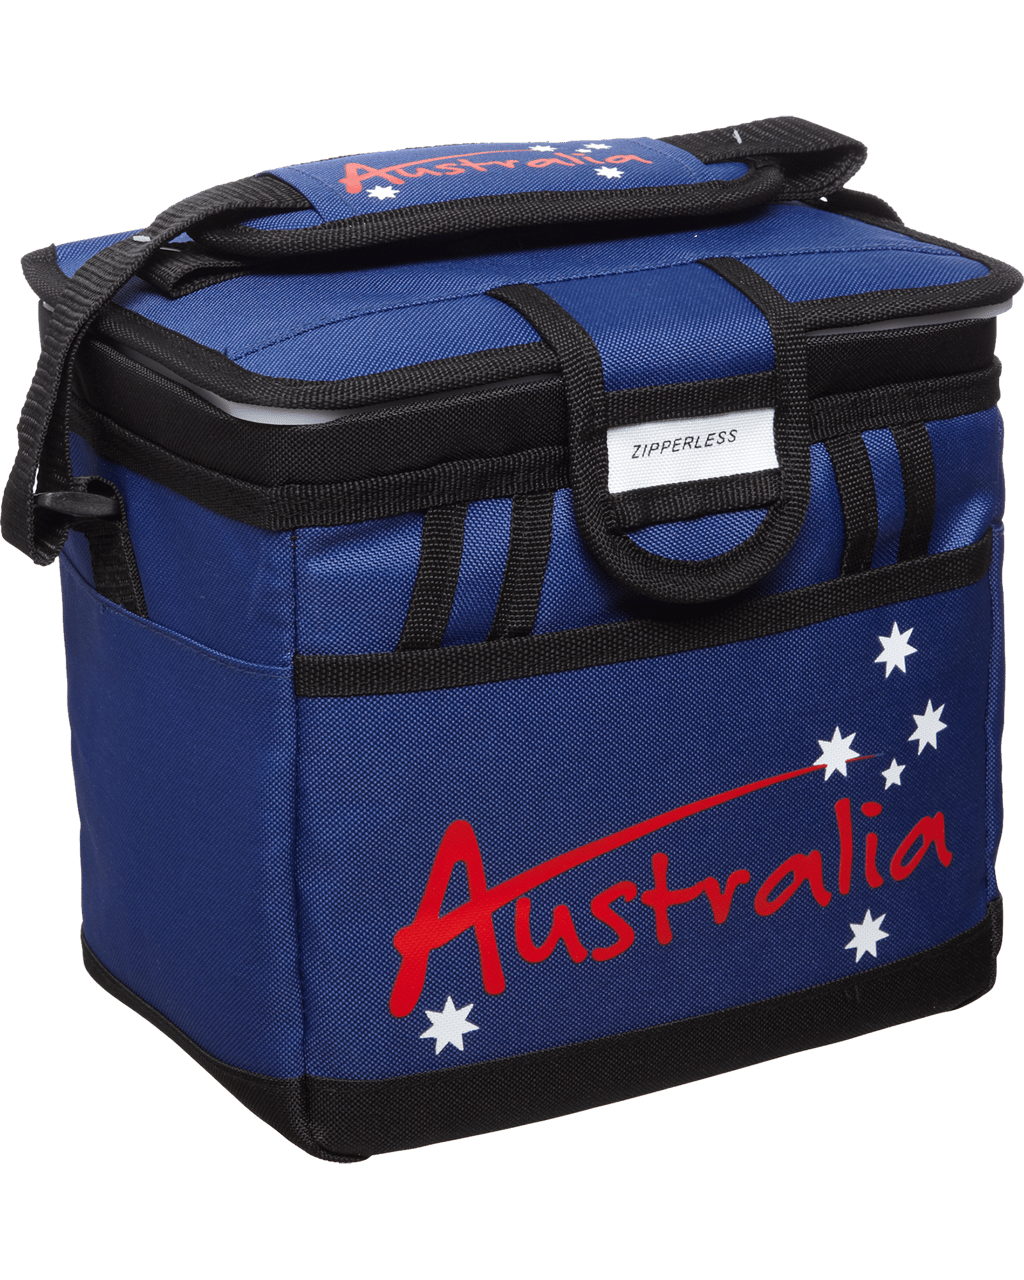 Australia Zipperless Hardbody Cooler 9 